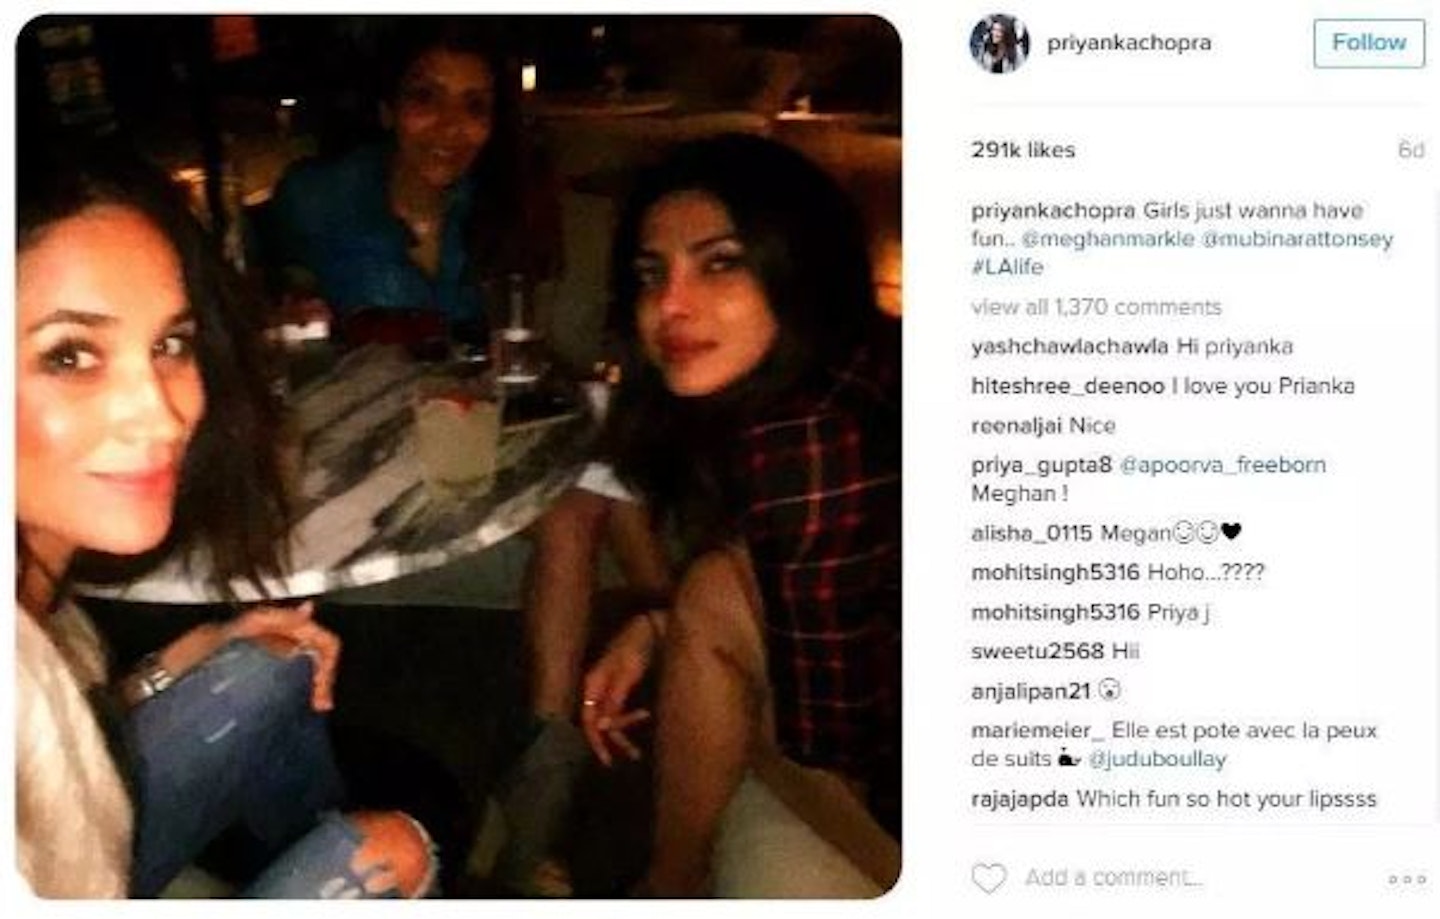 Priyanka Chopra shares Instagram photo of Meghan Markle